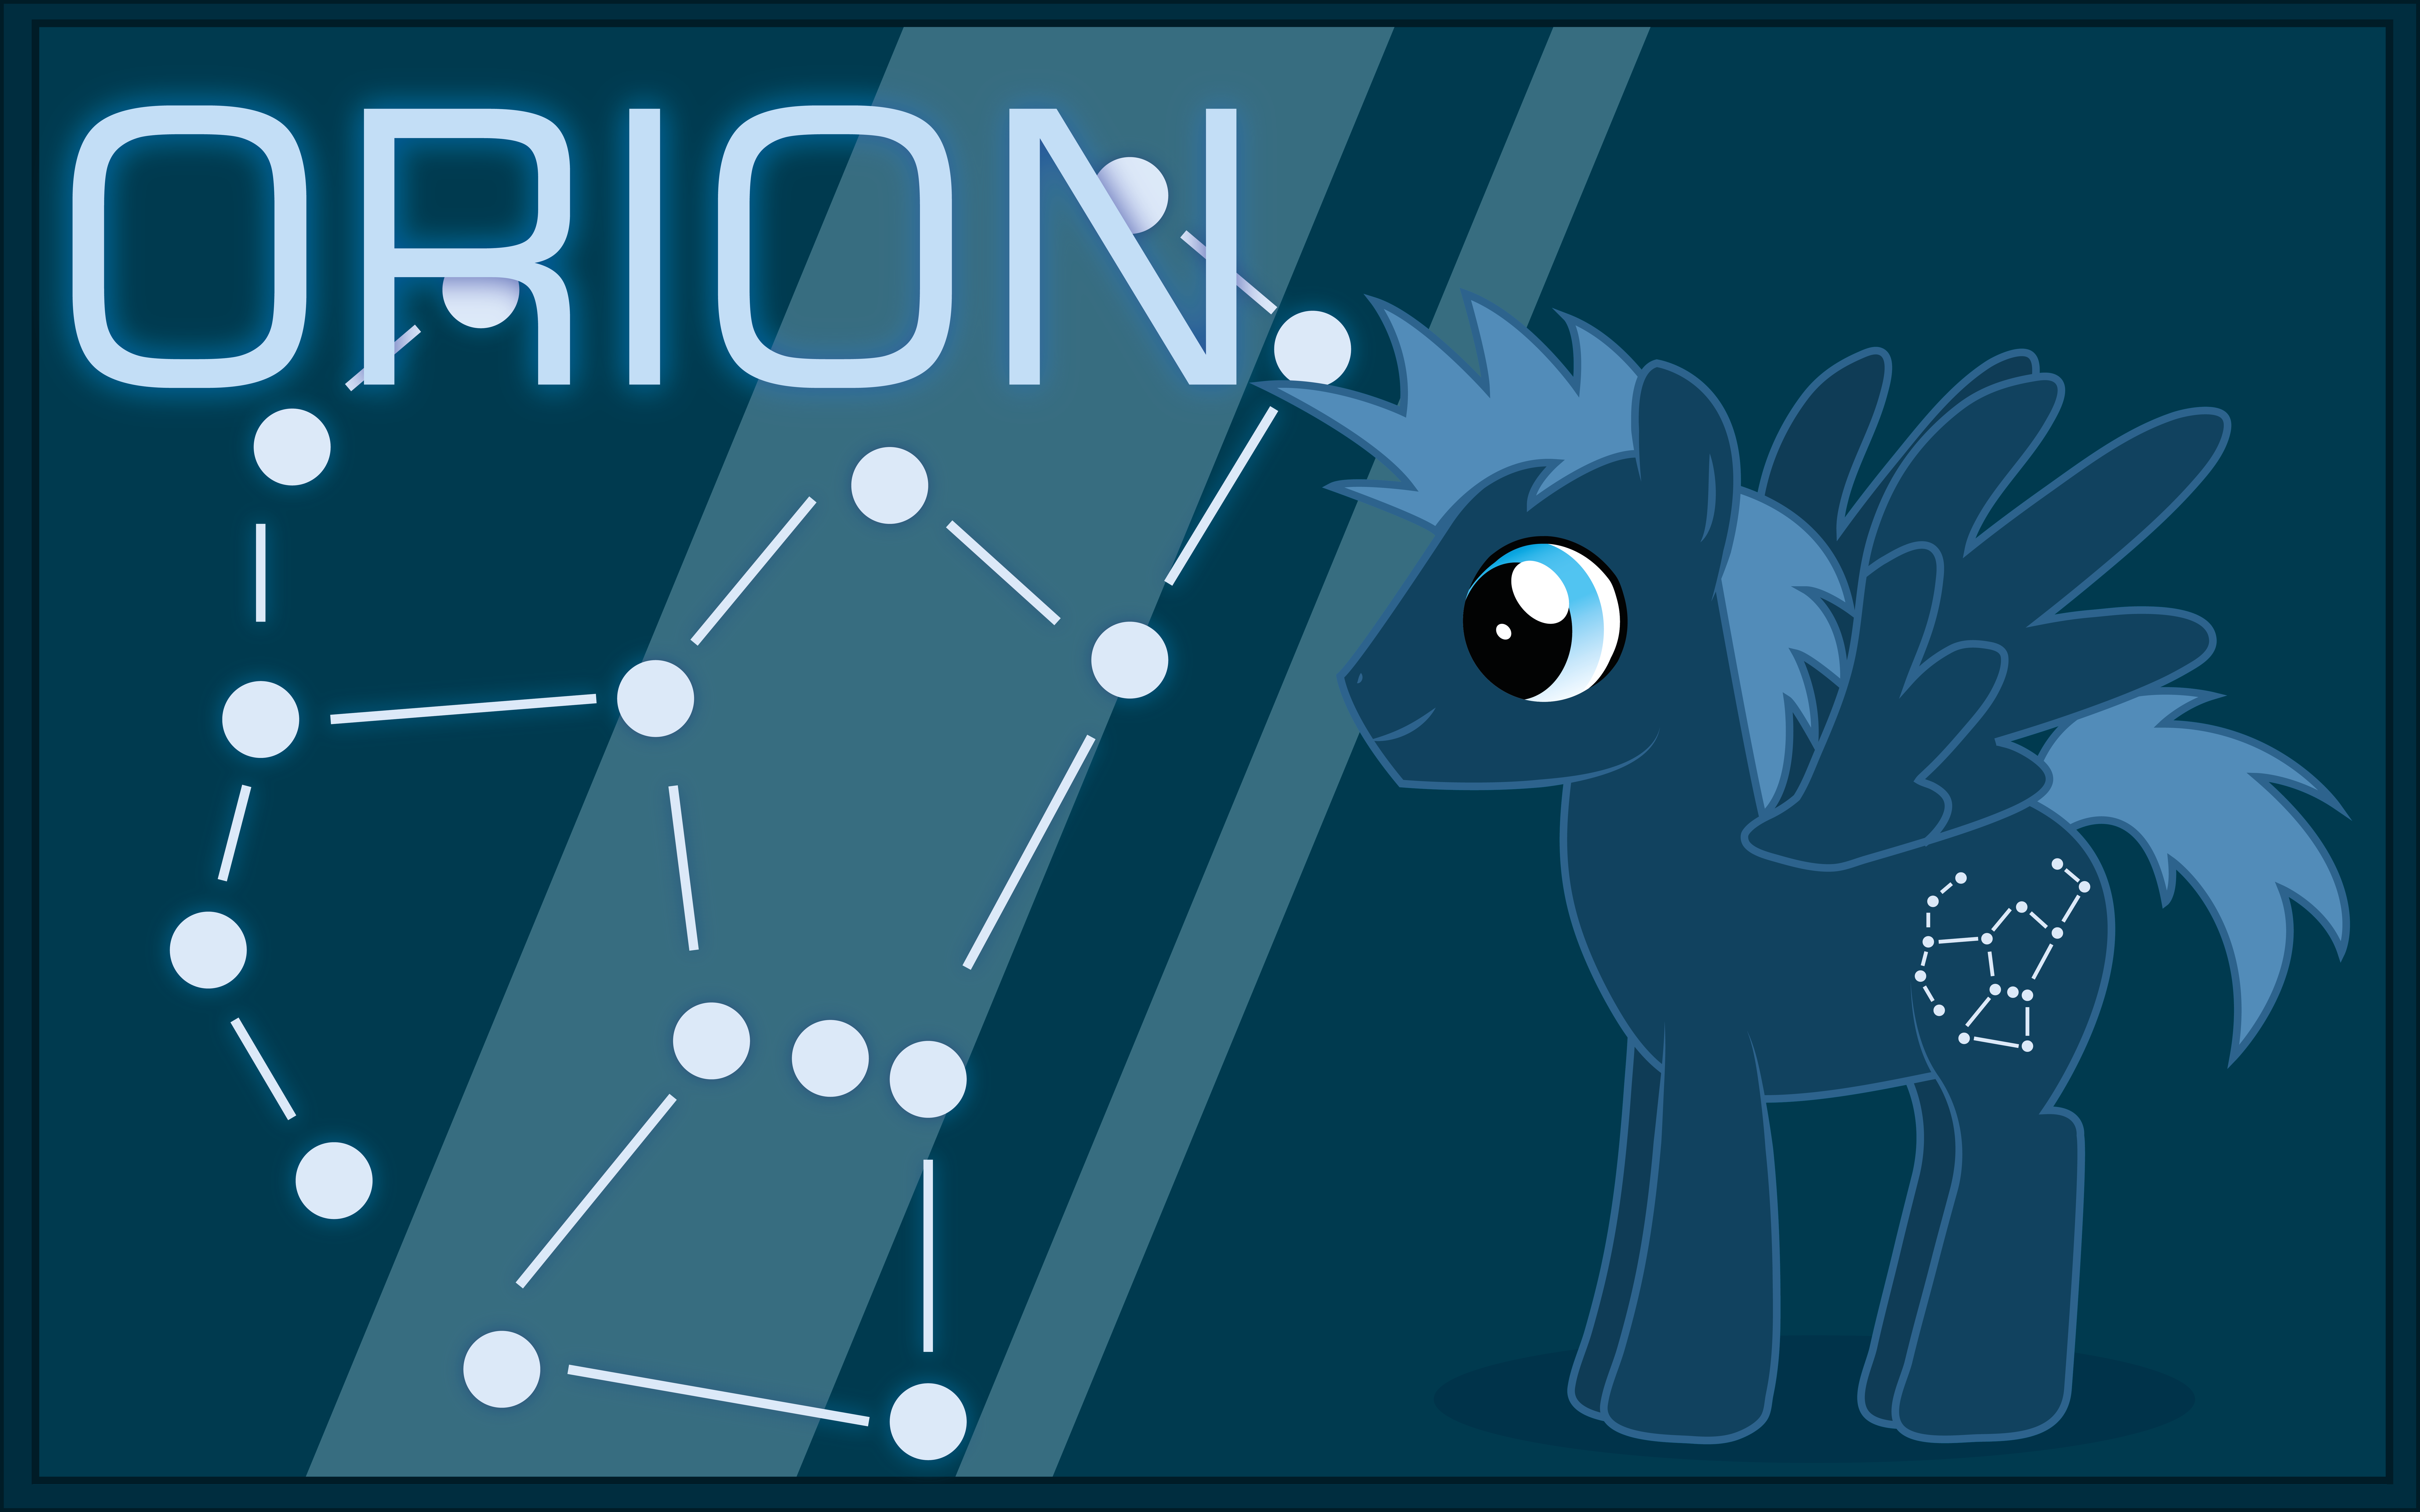 Star pony. Орион пони. Король Орион пони. Принц Ореон пони. Star Hunter пони.